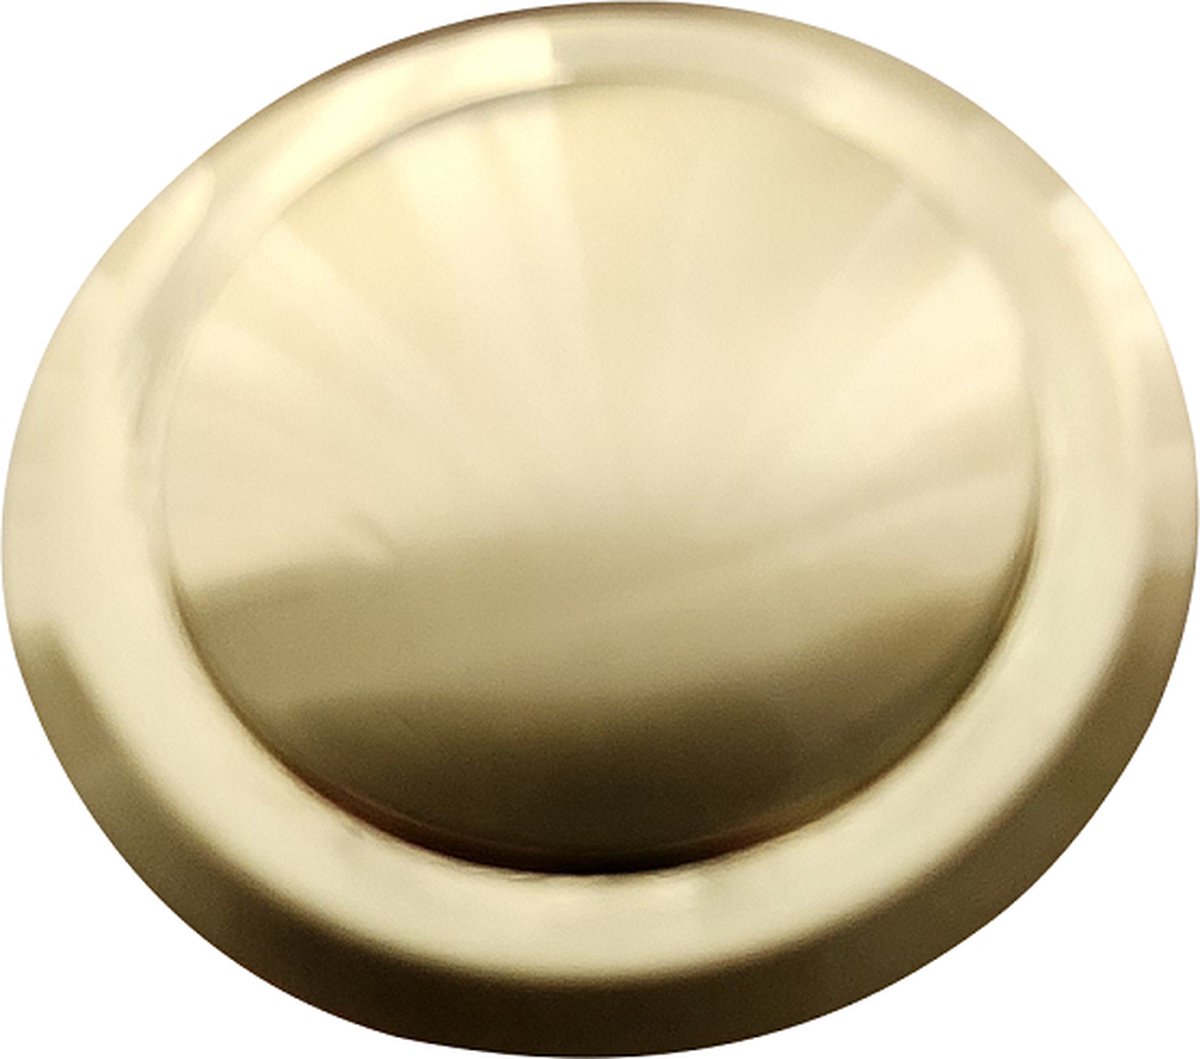 Doorknob gold round